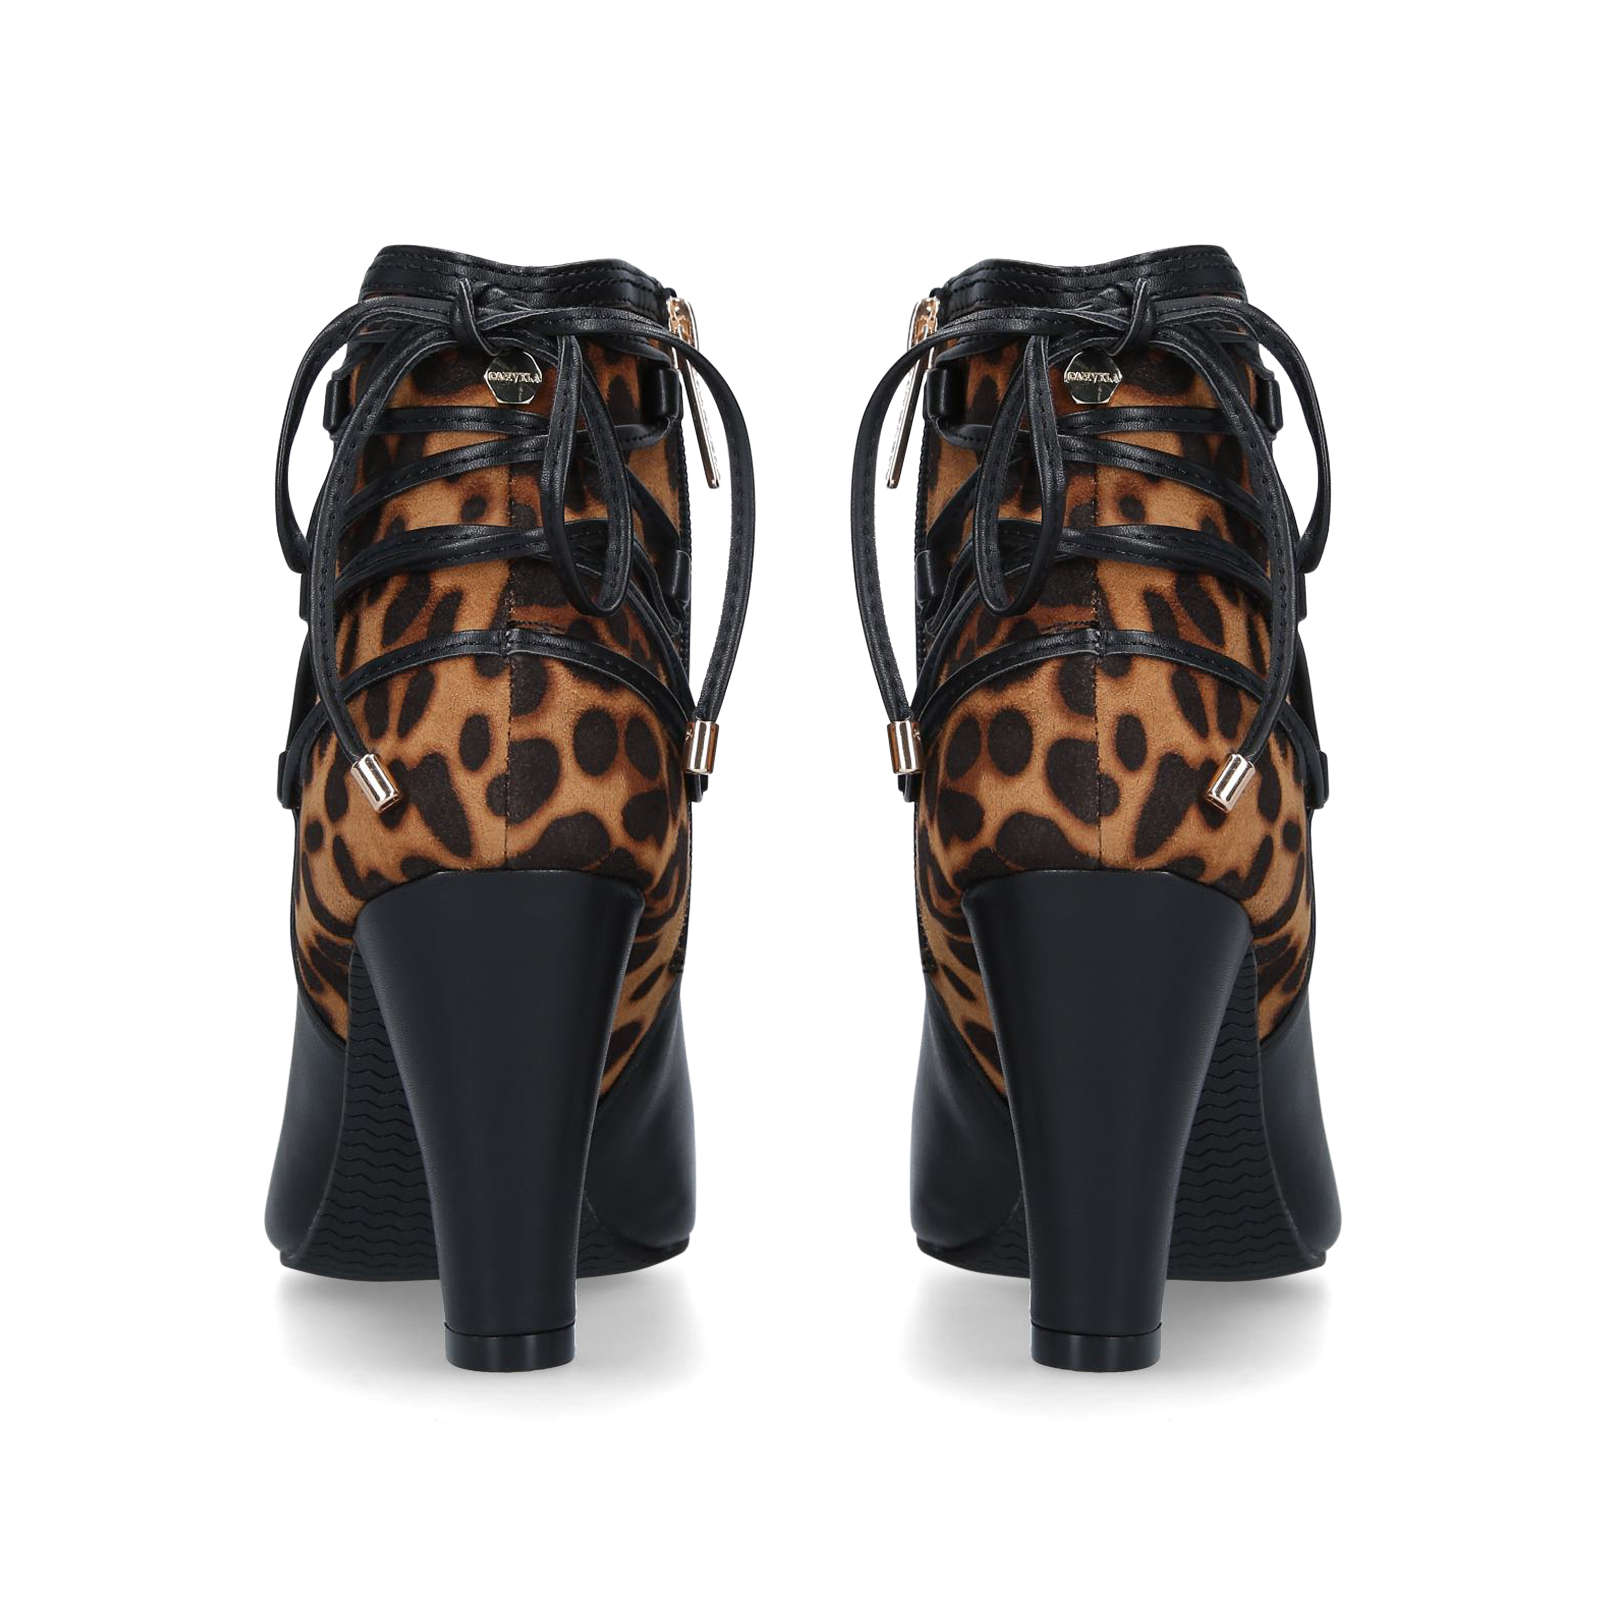 carvela leopard boots